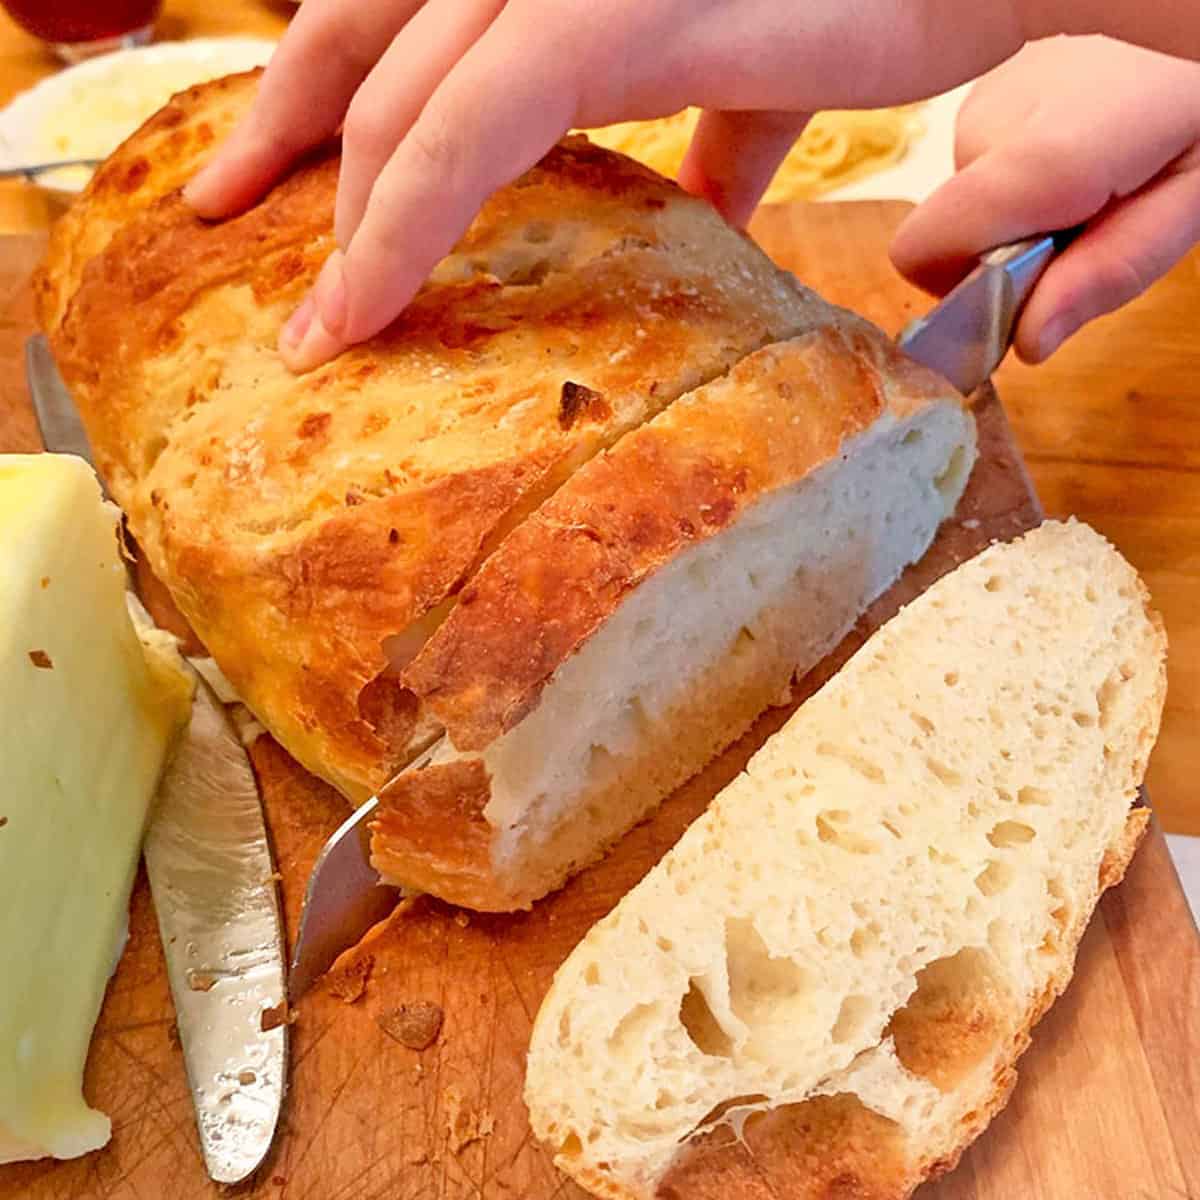 Slicing a loaf of crusty bread.